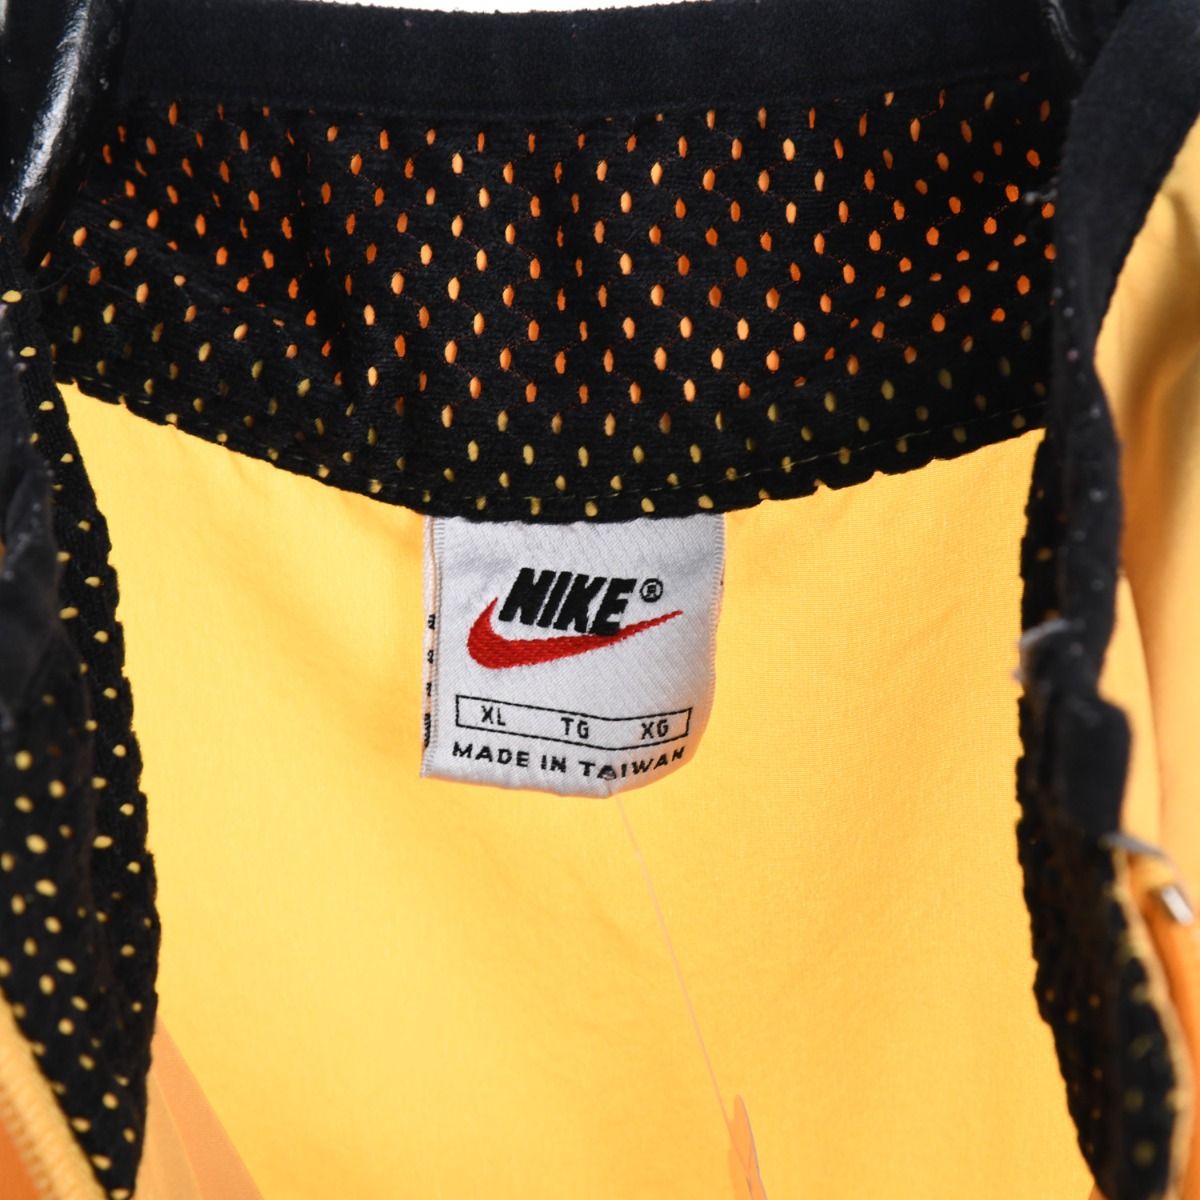 Nike 1990s Technical Vest